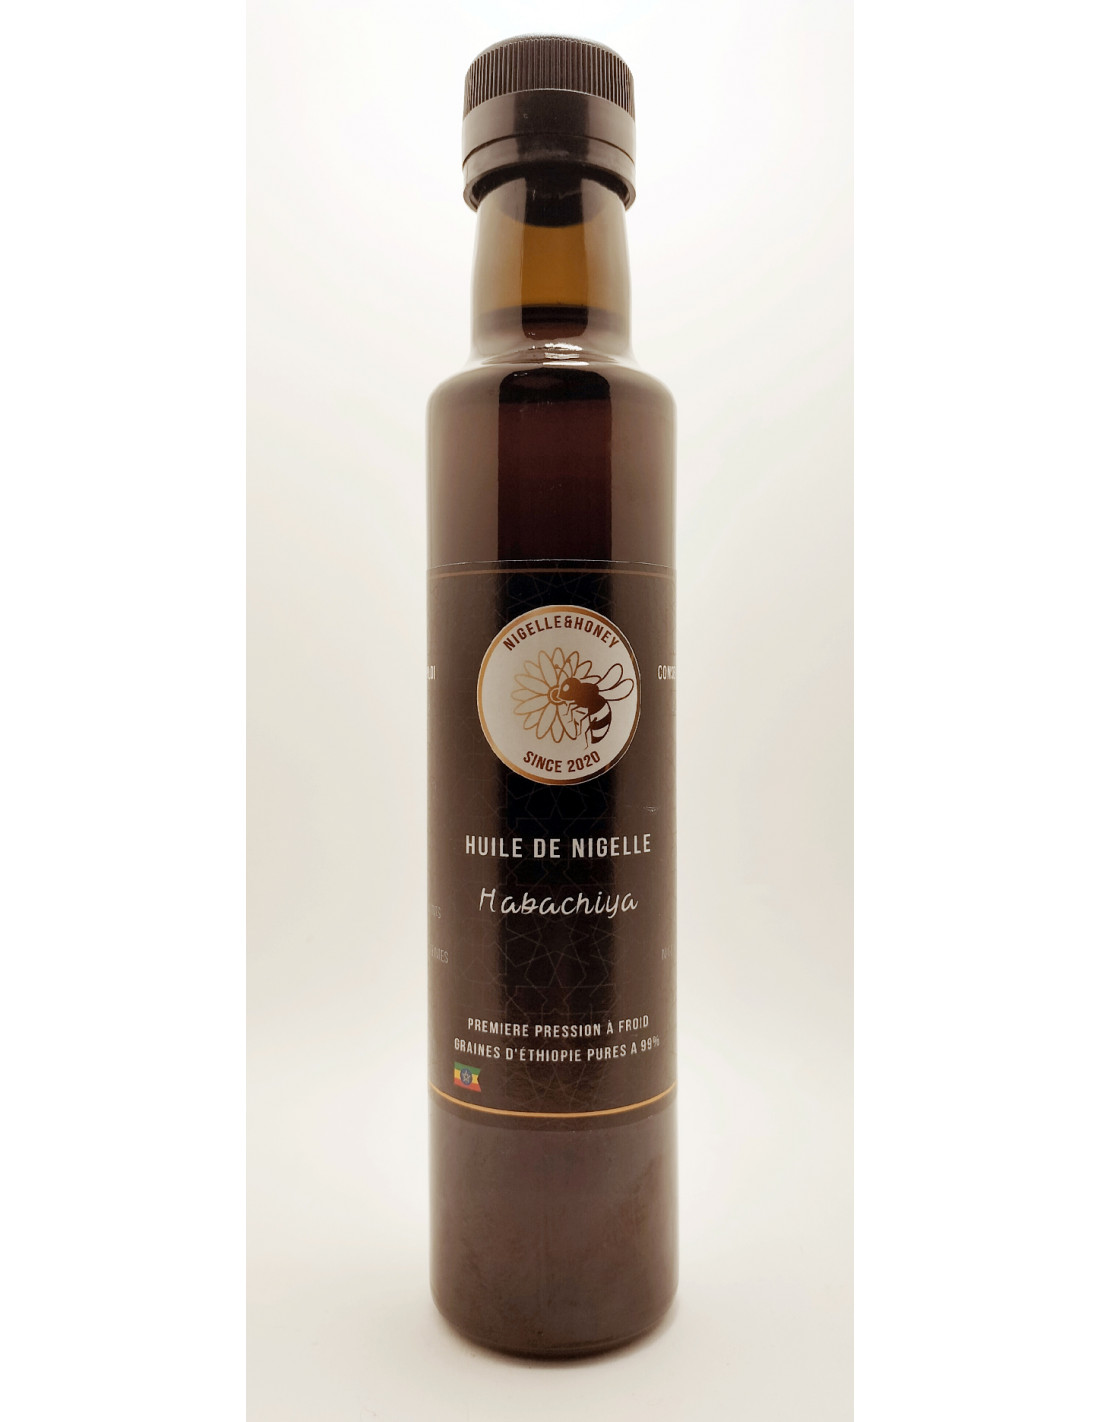 acheter huile de nigelle habachia - nigelle ethiopie